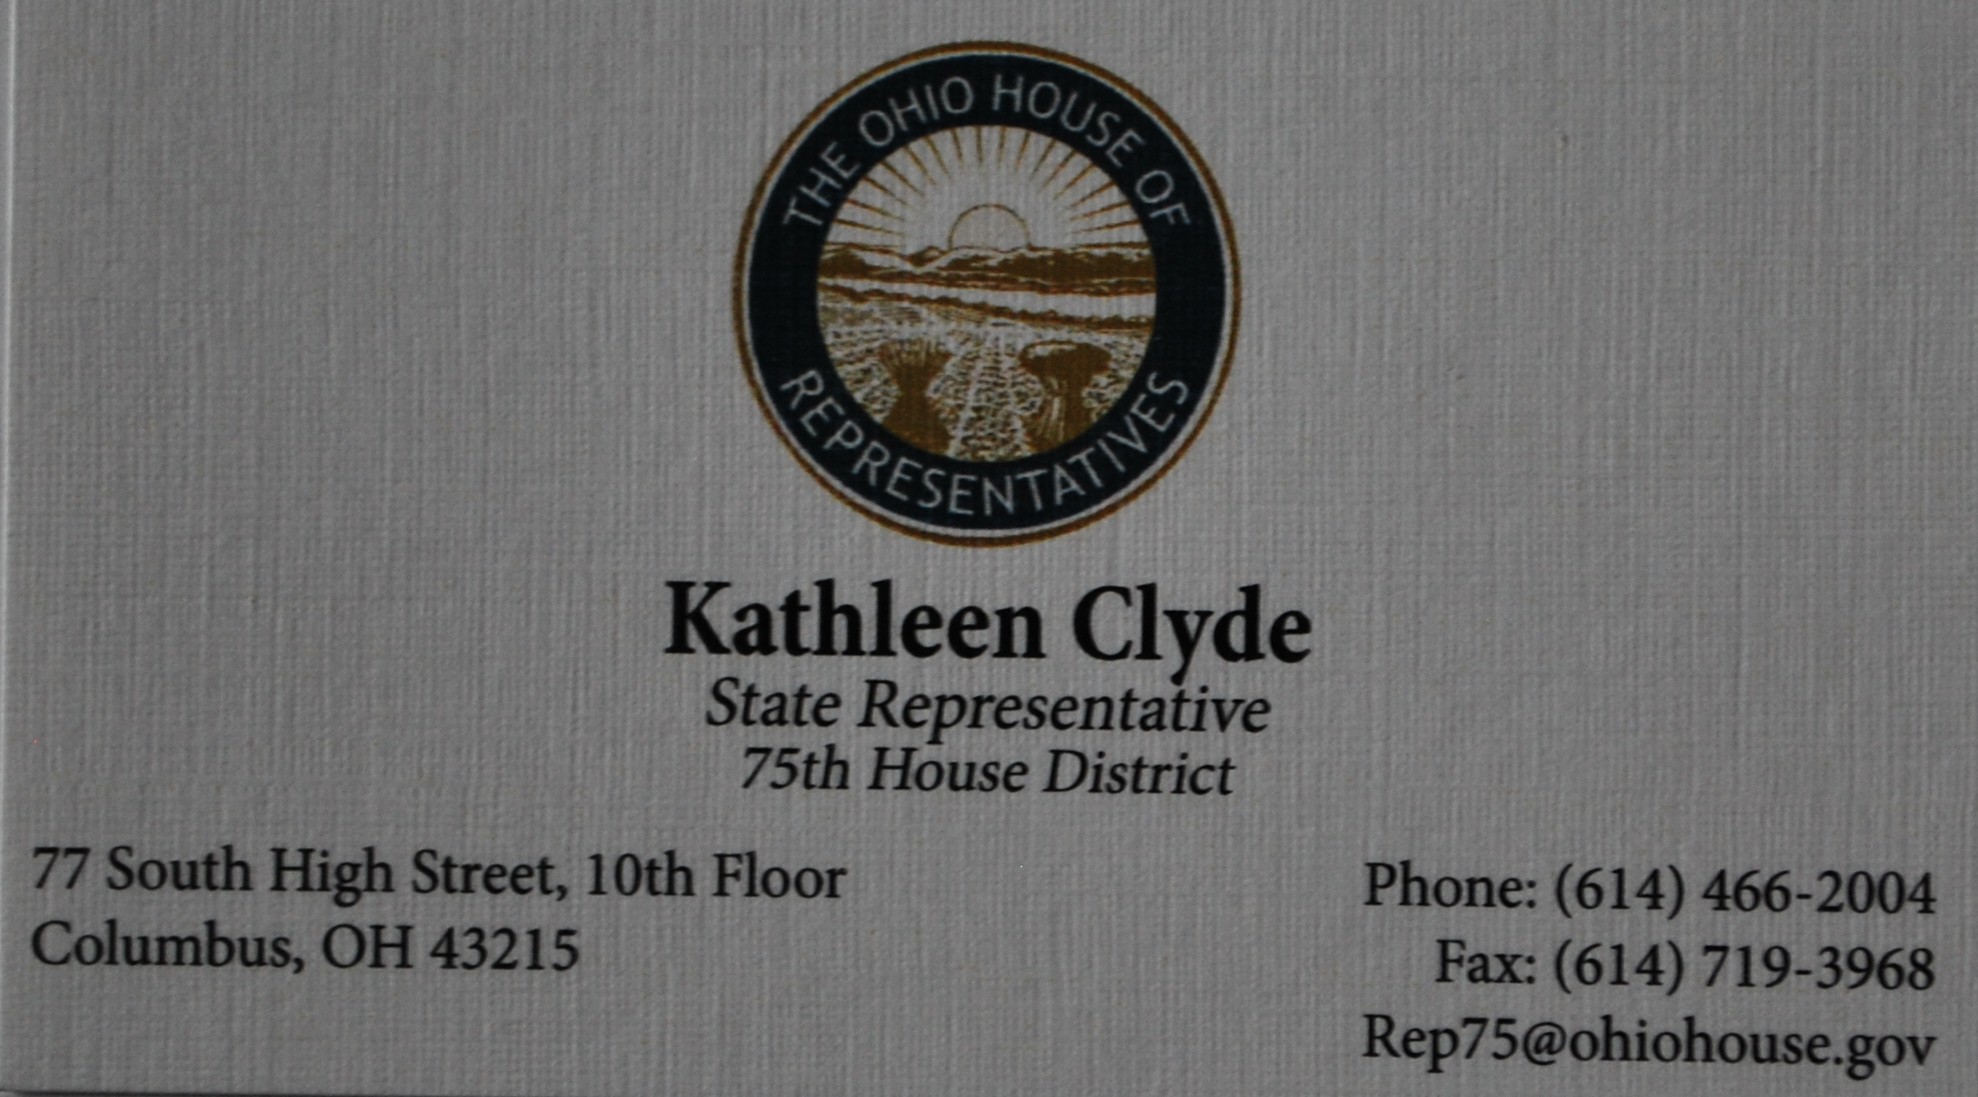 Kathleen Clyde business card photo.JPG resized